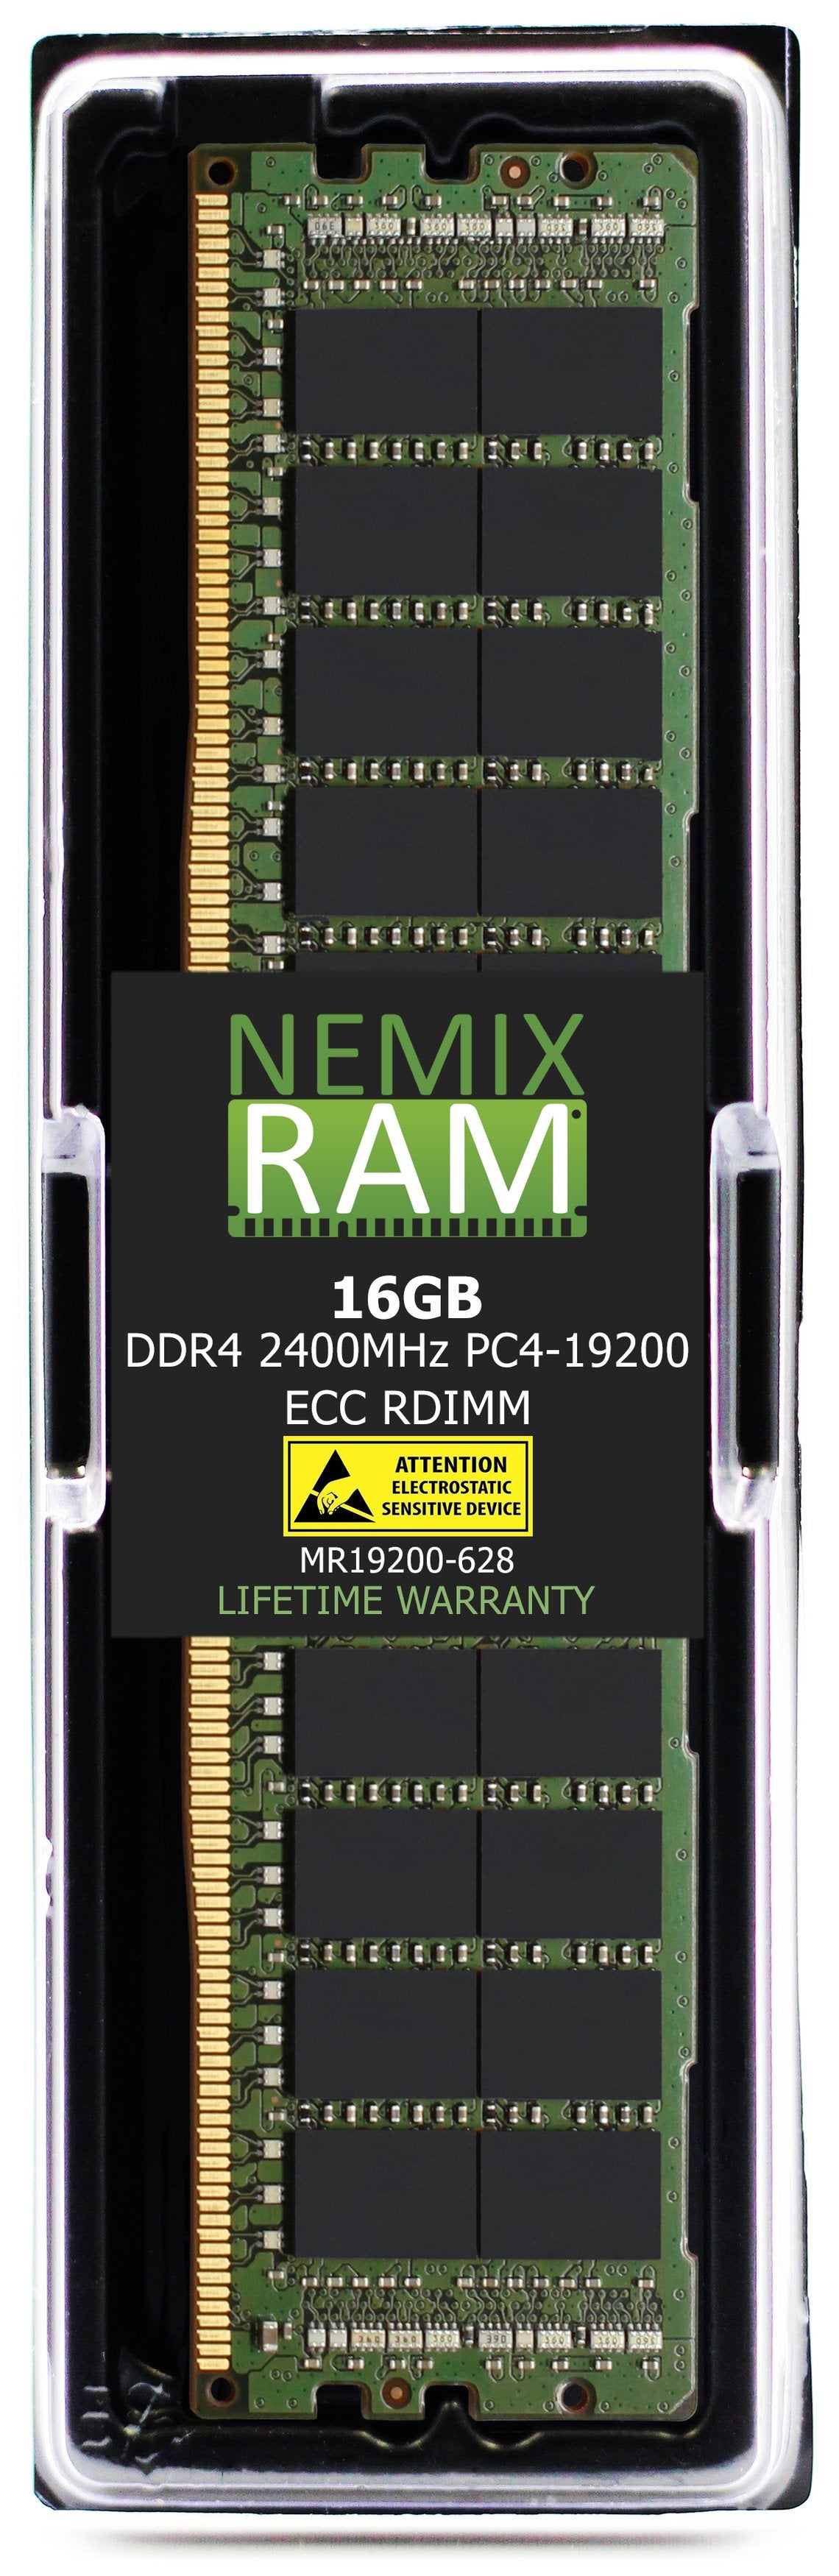 16GB DDR4 2400MHZ PC4-19200 RDIMM Compatible with Supermicro MEM-DR416L-HL03-ER24